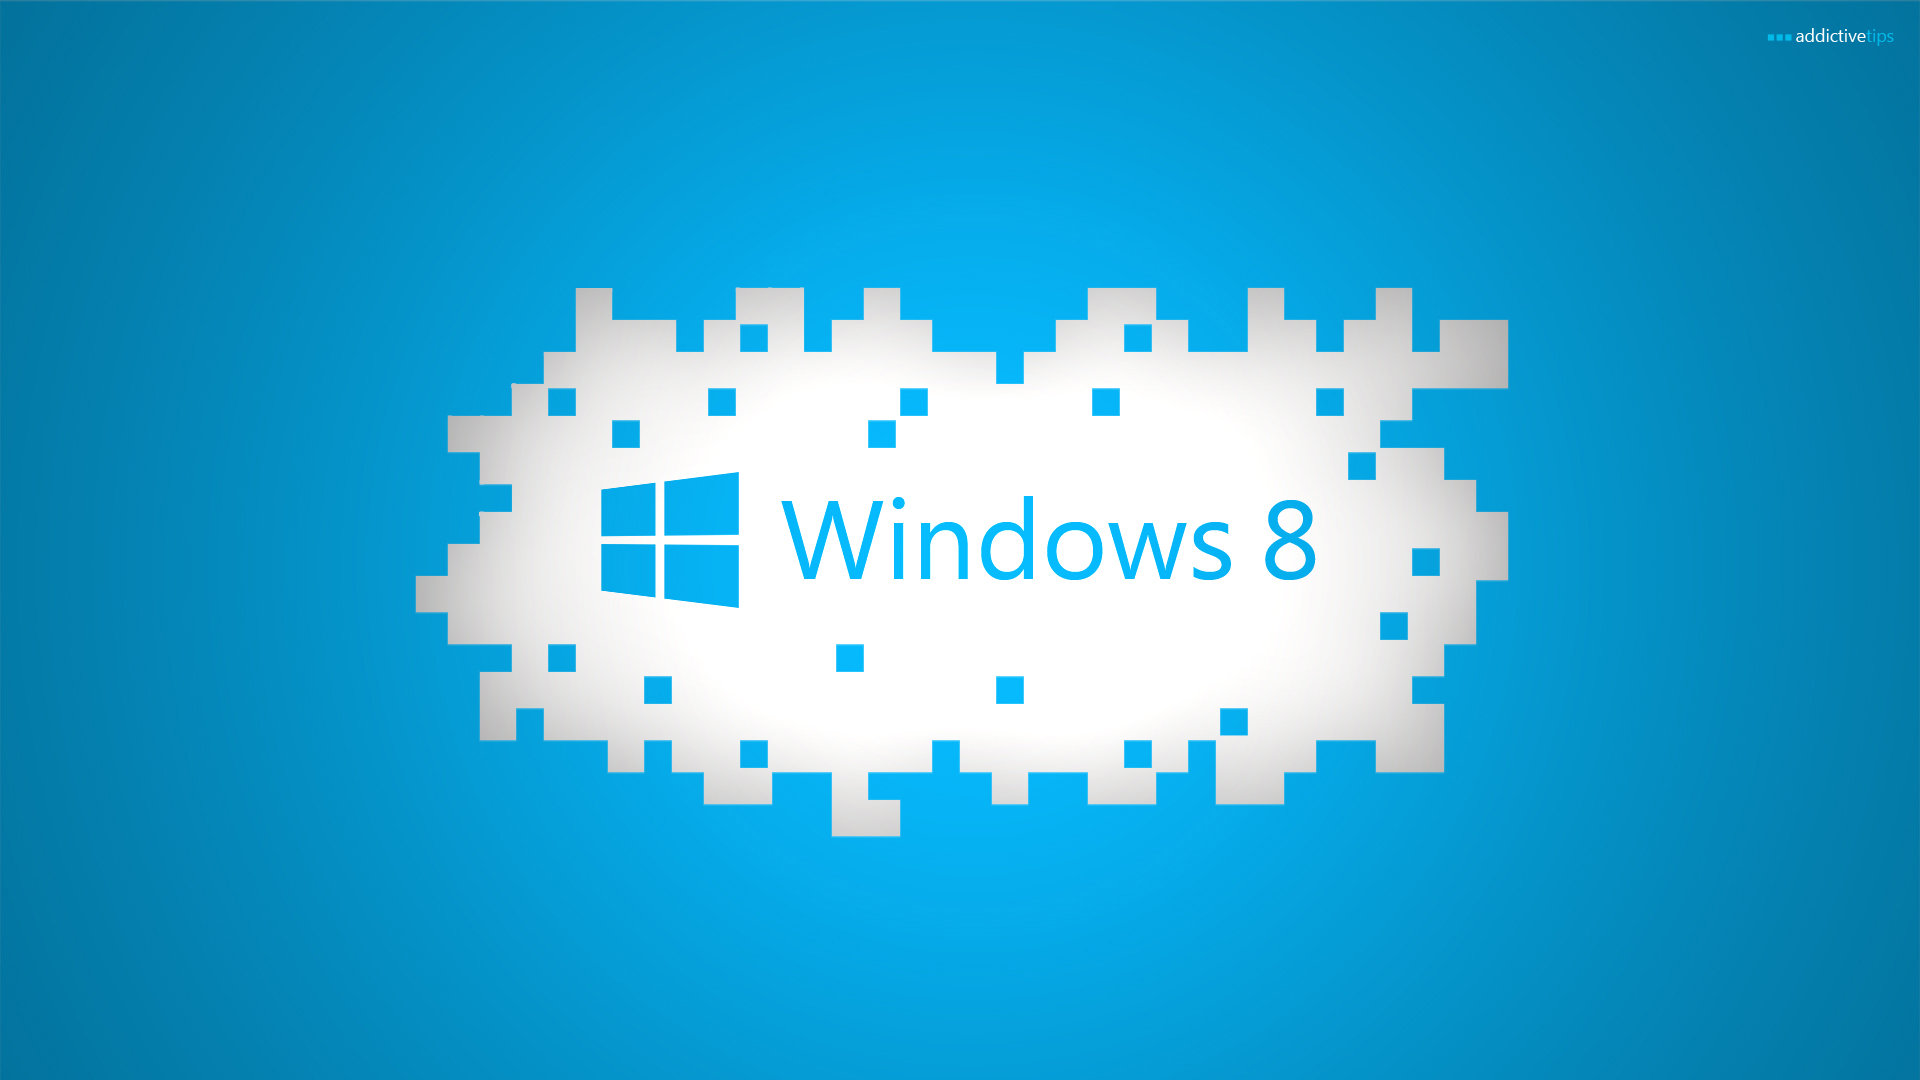 Windows 8 Wallpaper Download 1920x1080